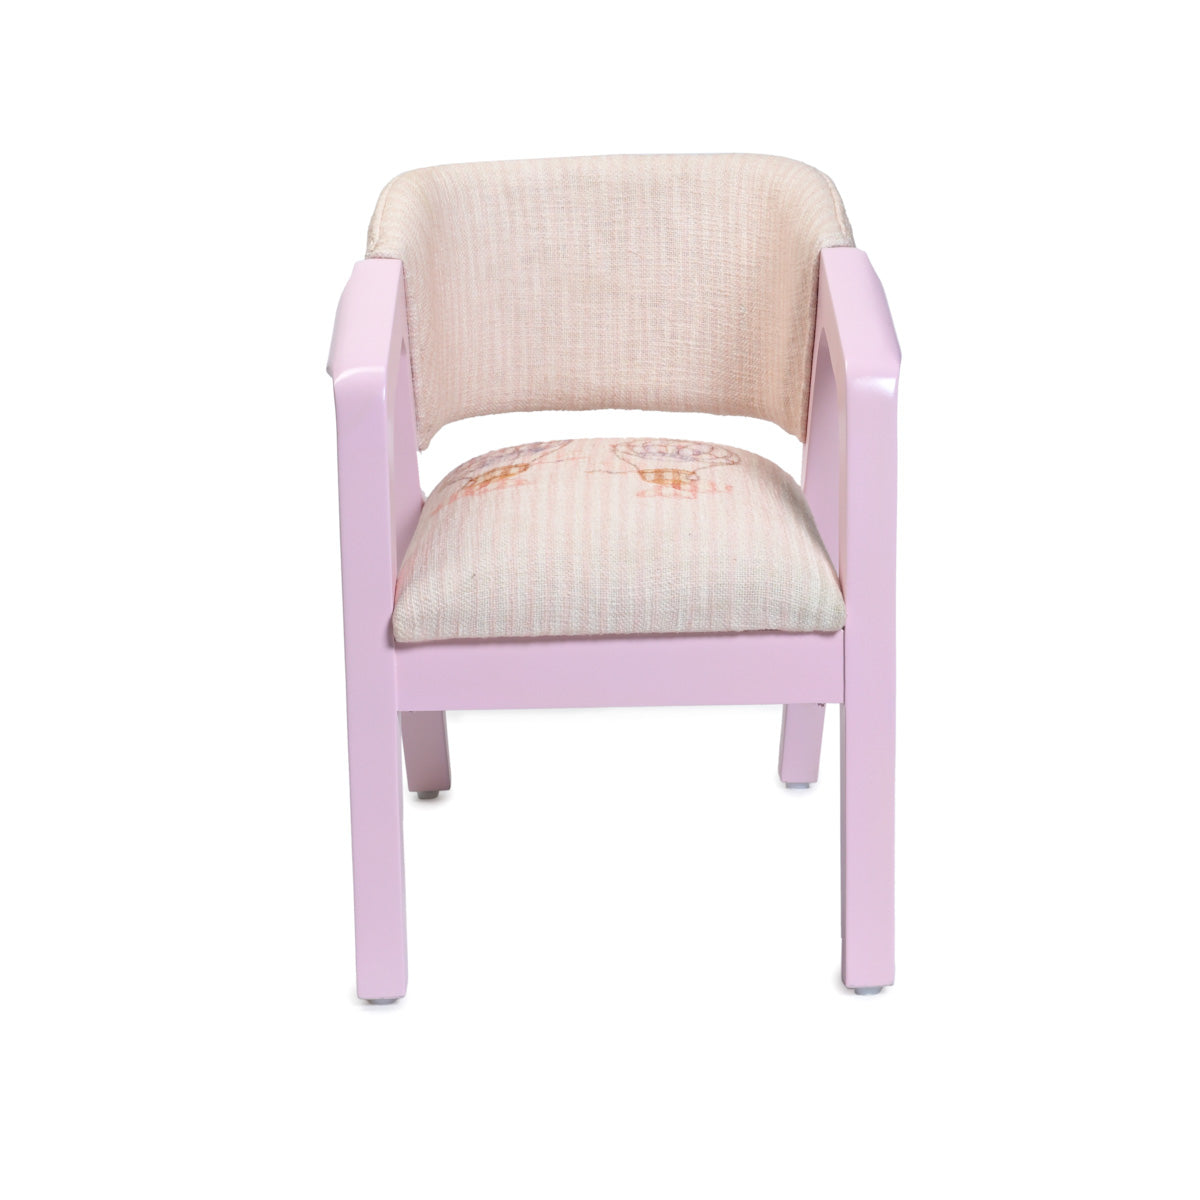 Kids Blip Pink Chair